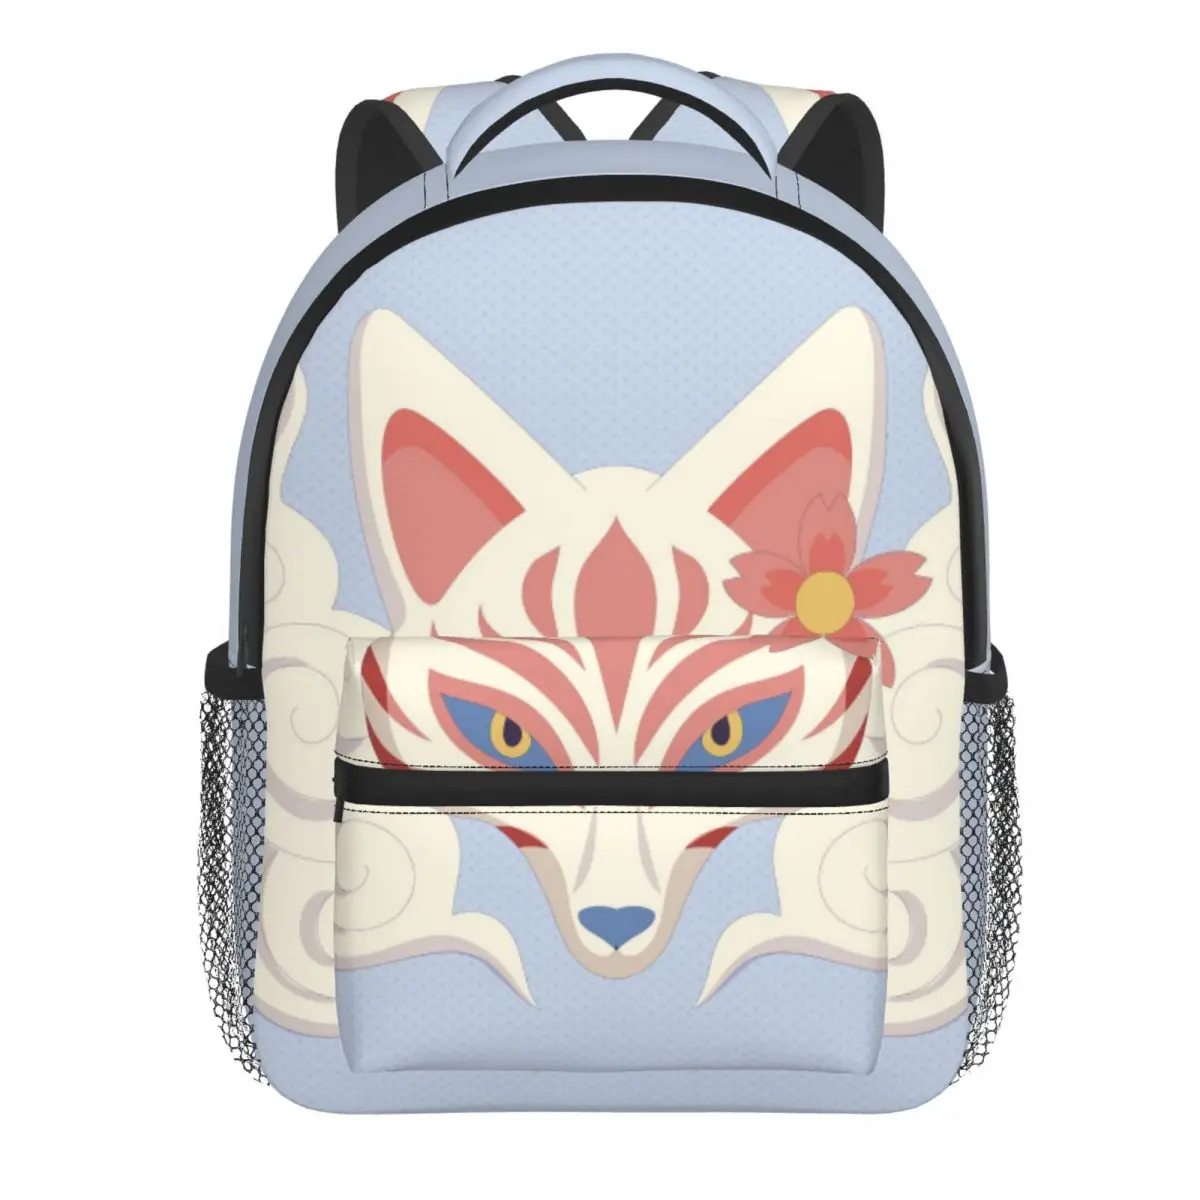 Kitsune Mask Illustration Baby Backpack Kindergarten Schoolbag Kids Children School Bag